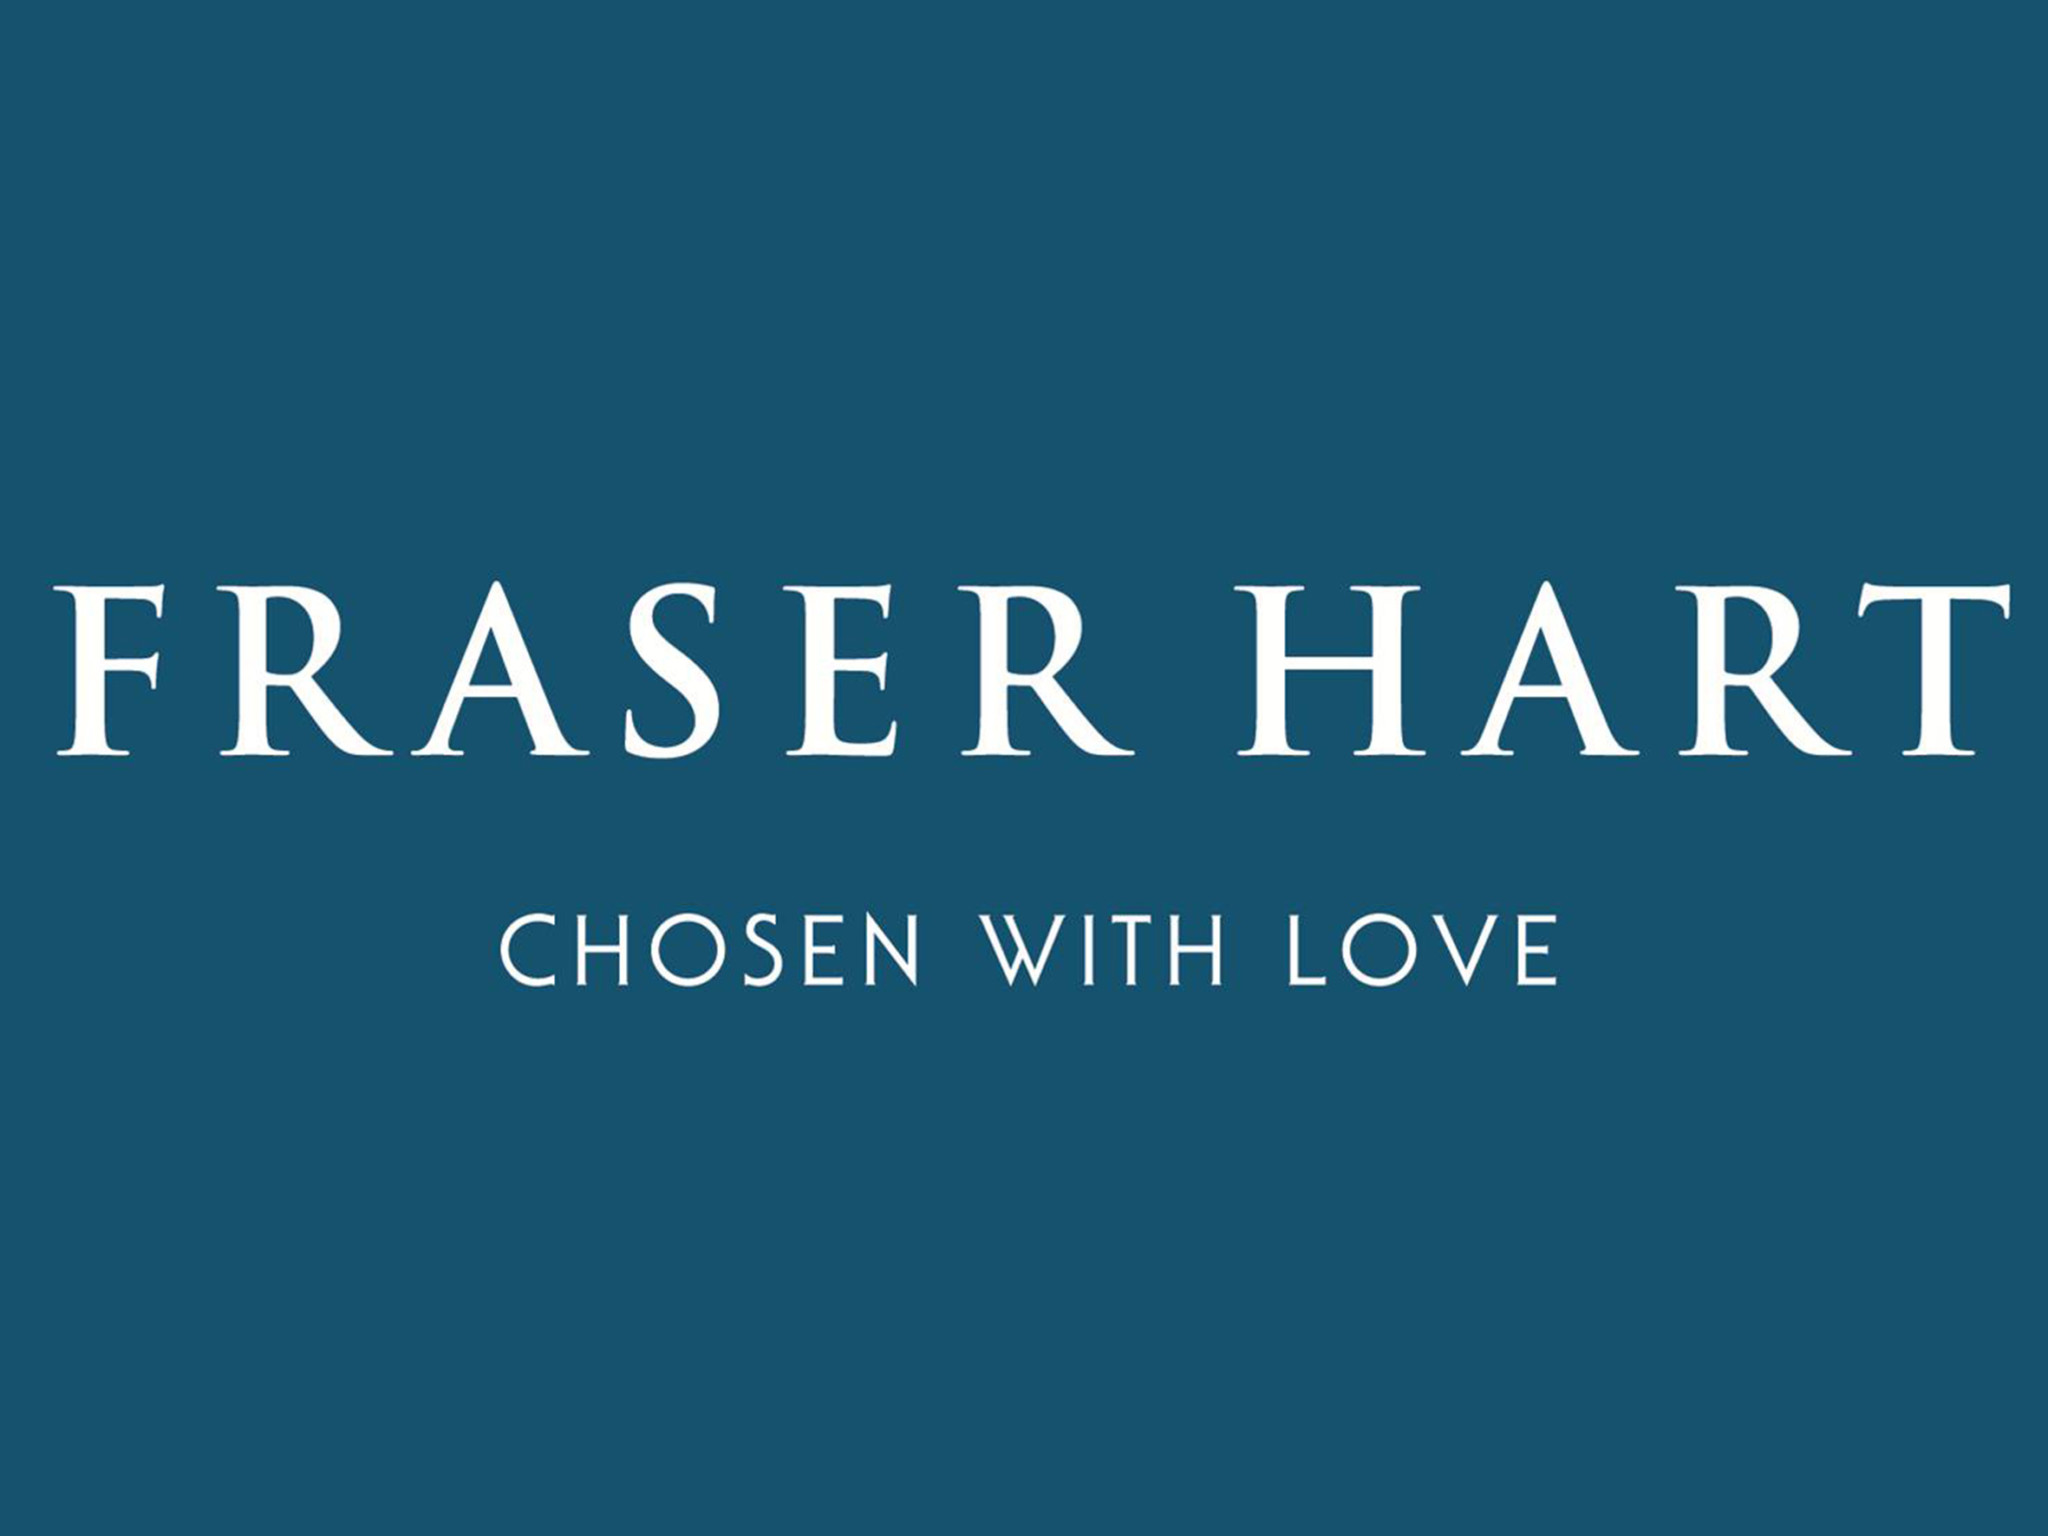 Fraser hart chosen with love